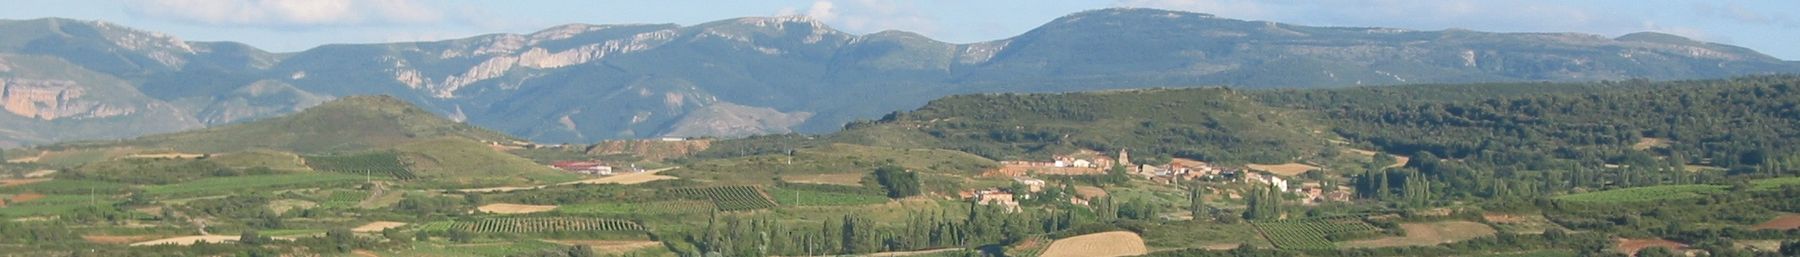 WV banner La Rioja View of Medrano.jpg